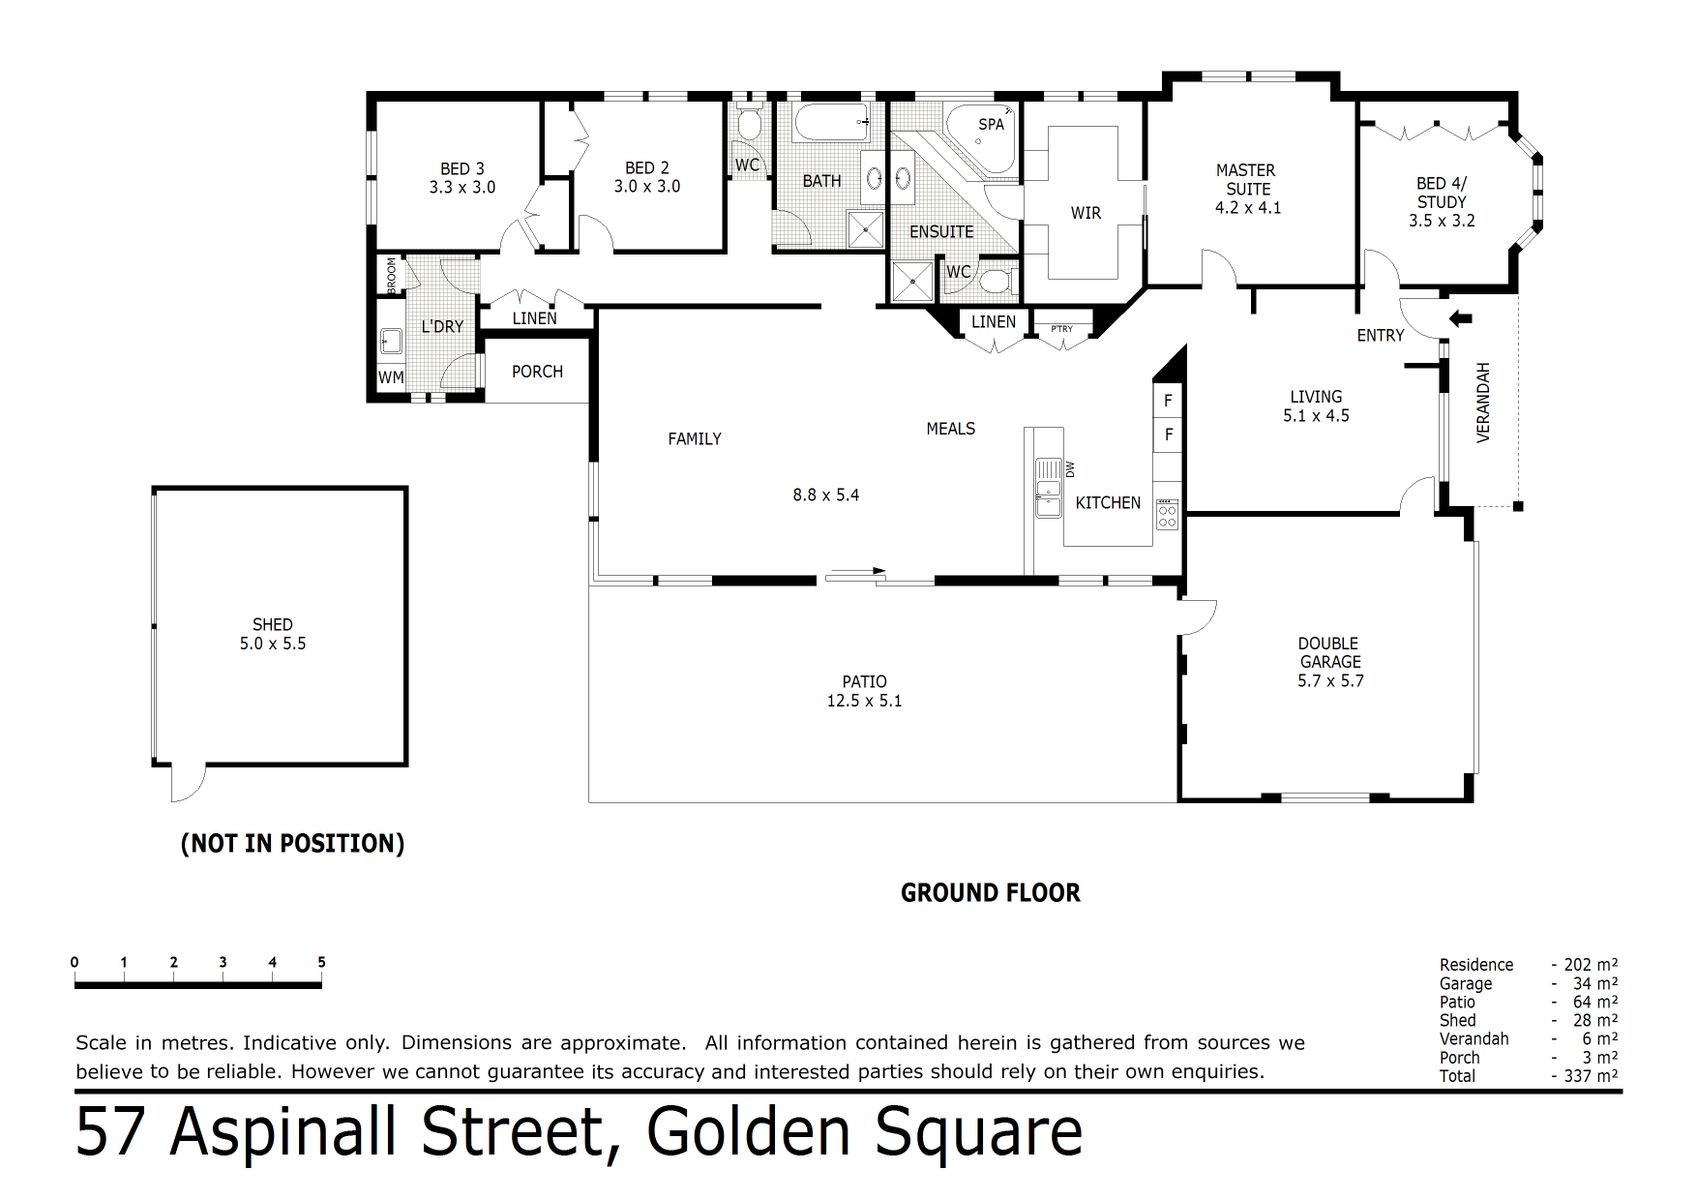 57 Aspinall Street Golden Square (10 AUG 2021) 236sqm